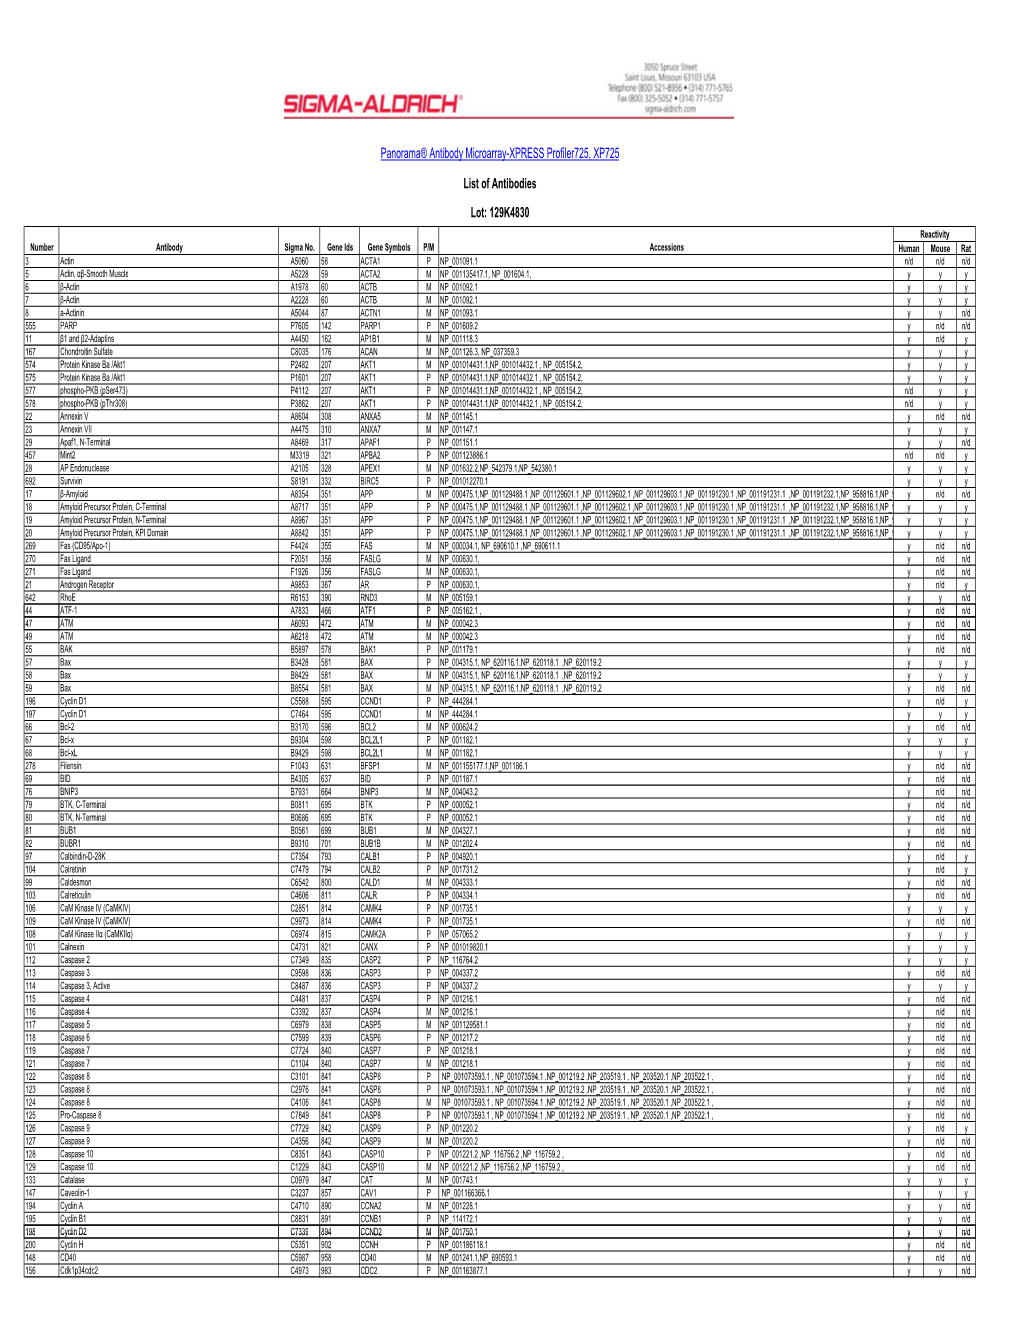 XP725 Antibody List Lot 129K4830